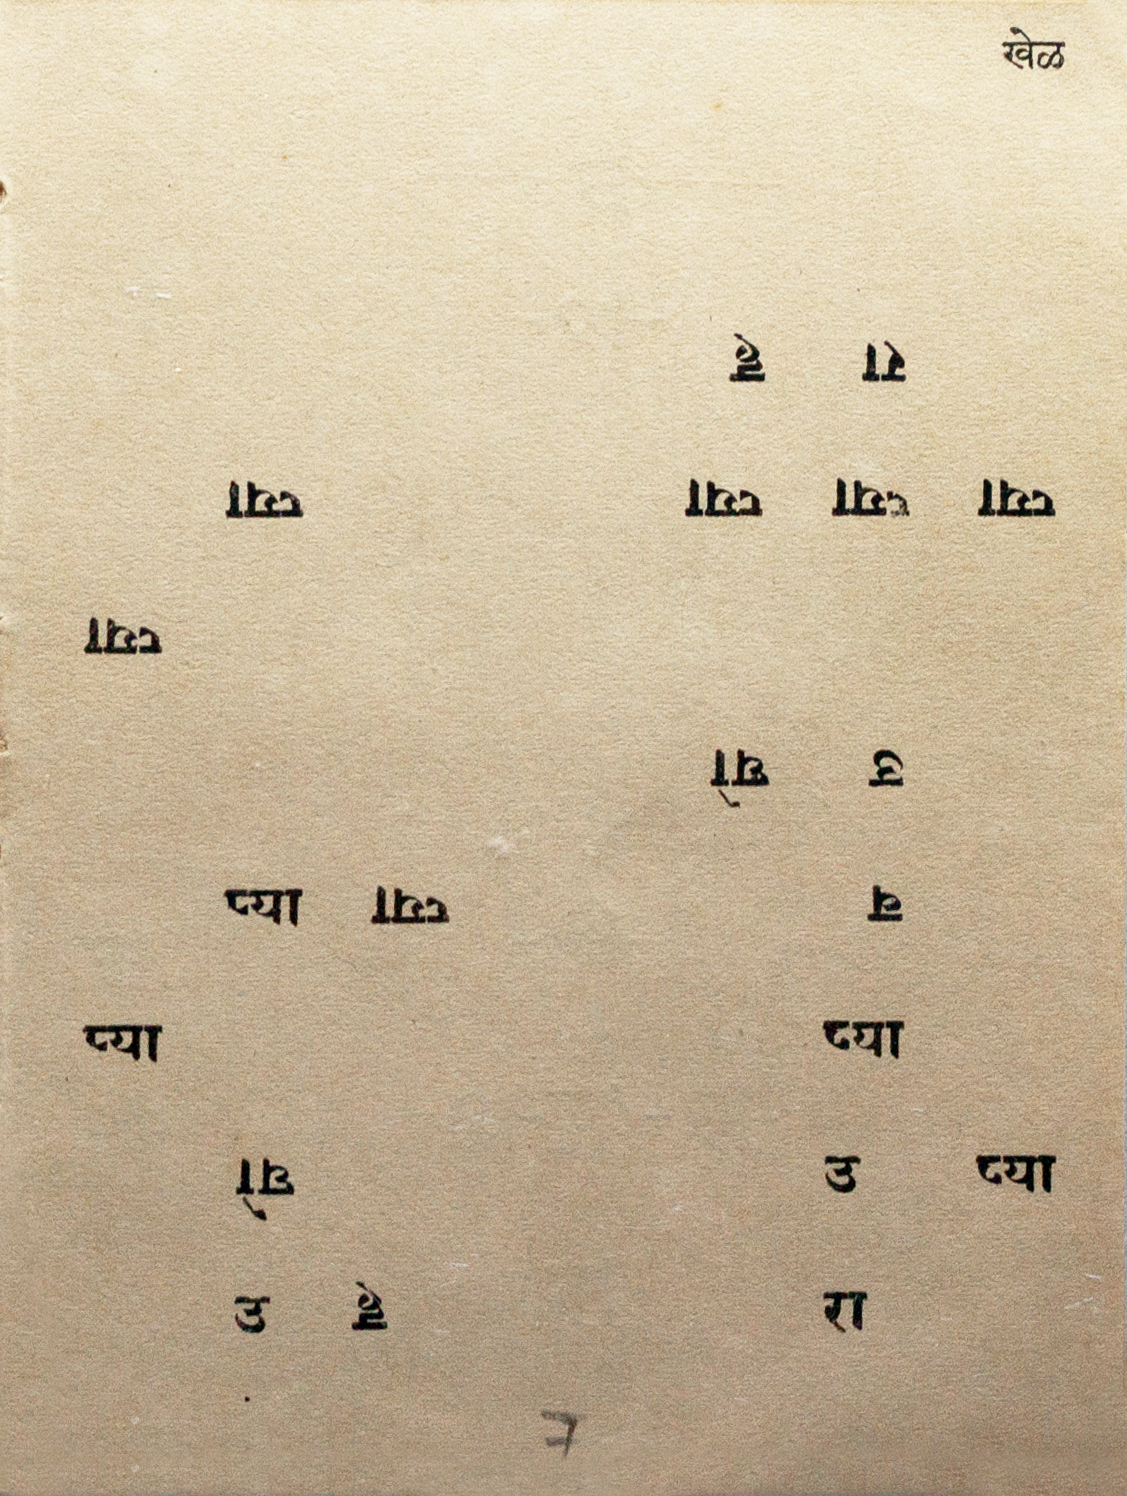 खेळ. Concrete poetry in Marathi titled “Play” by R. K. Joshi. Rava No. 10, November 1972. Image courtesy Shrujana N. Shridhar.